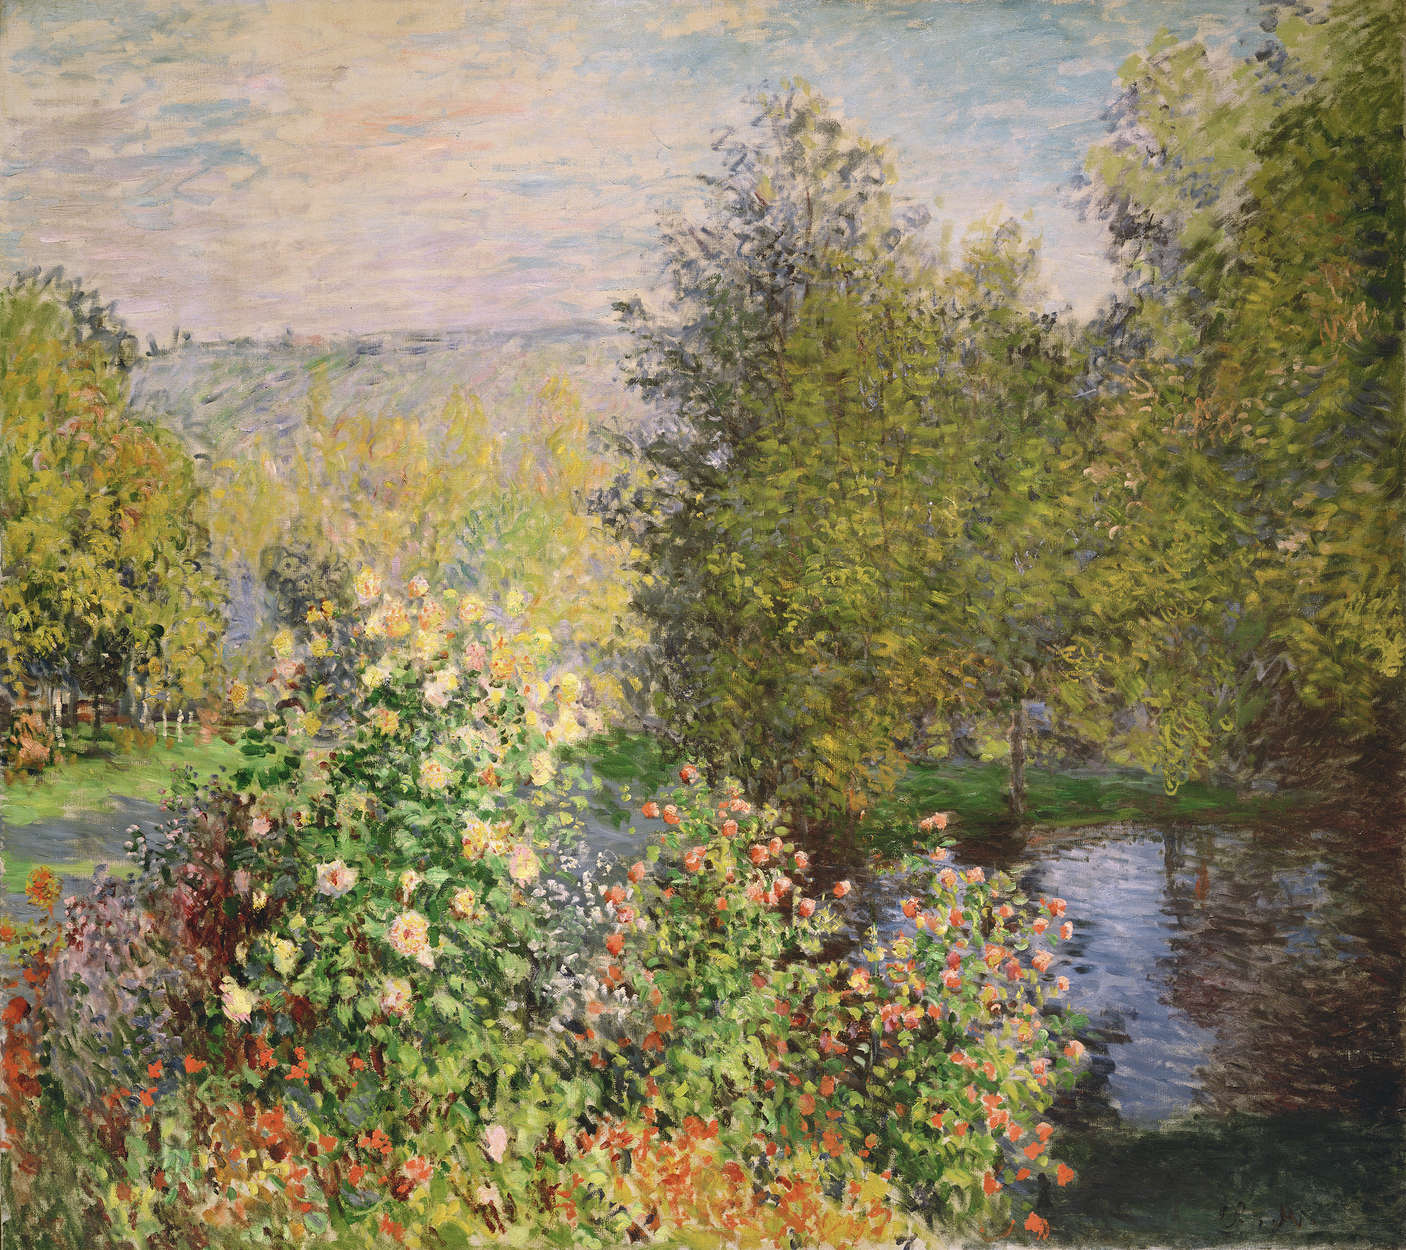             Mural "Un rincón del jardín en Montgeron" de Claude Monet
        